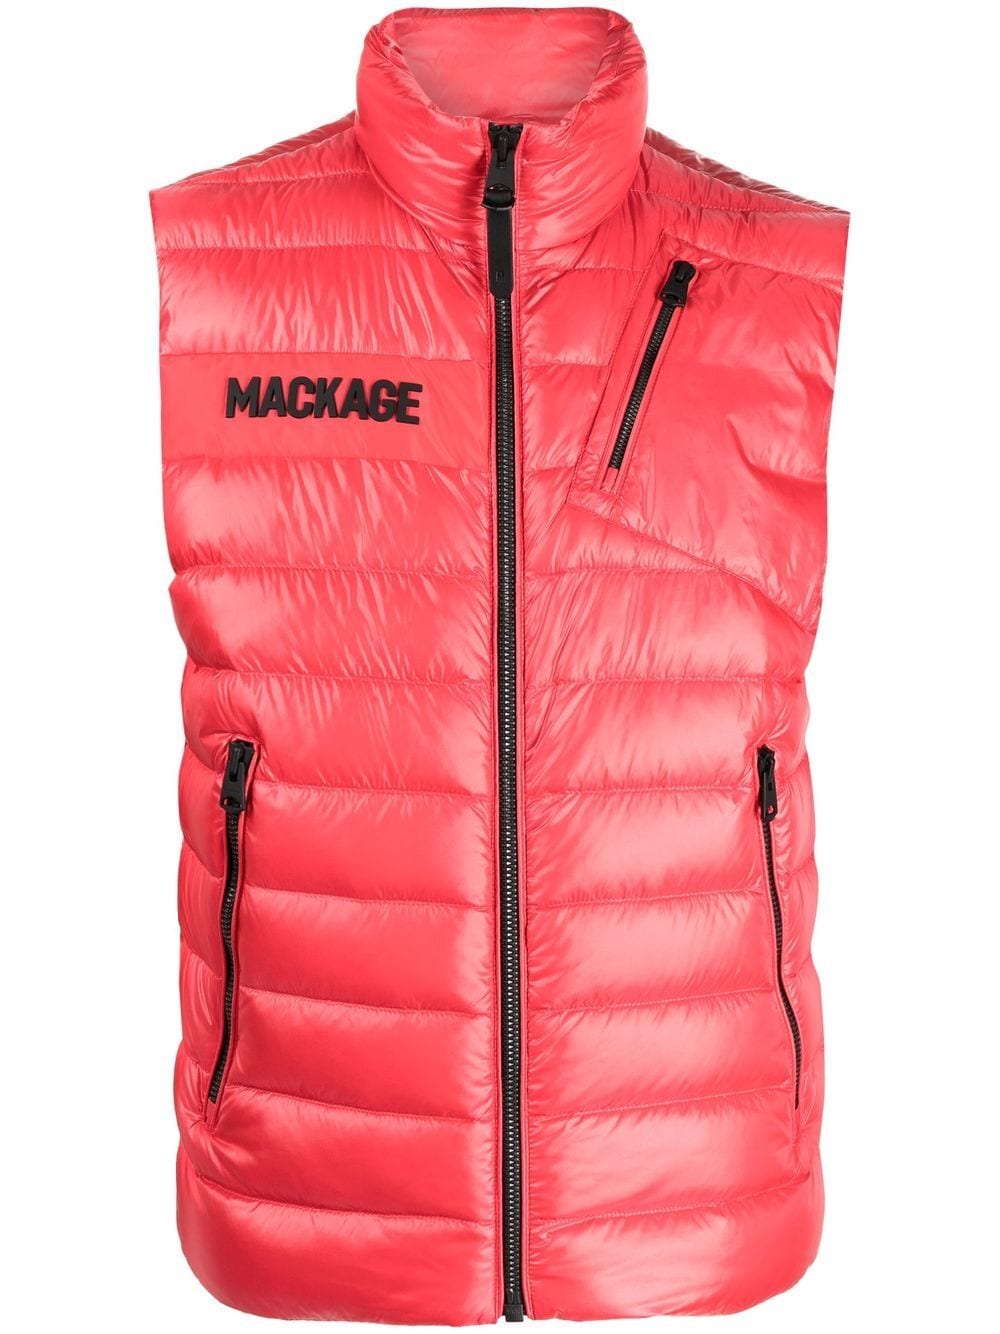 Mackage-OUTLET-SALE-Hardy Down Vest Jacket-ARCHIVIST